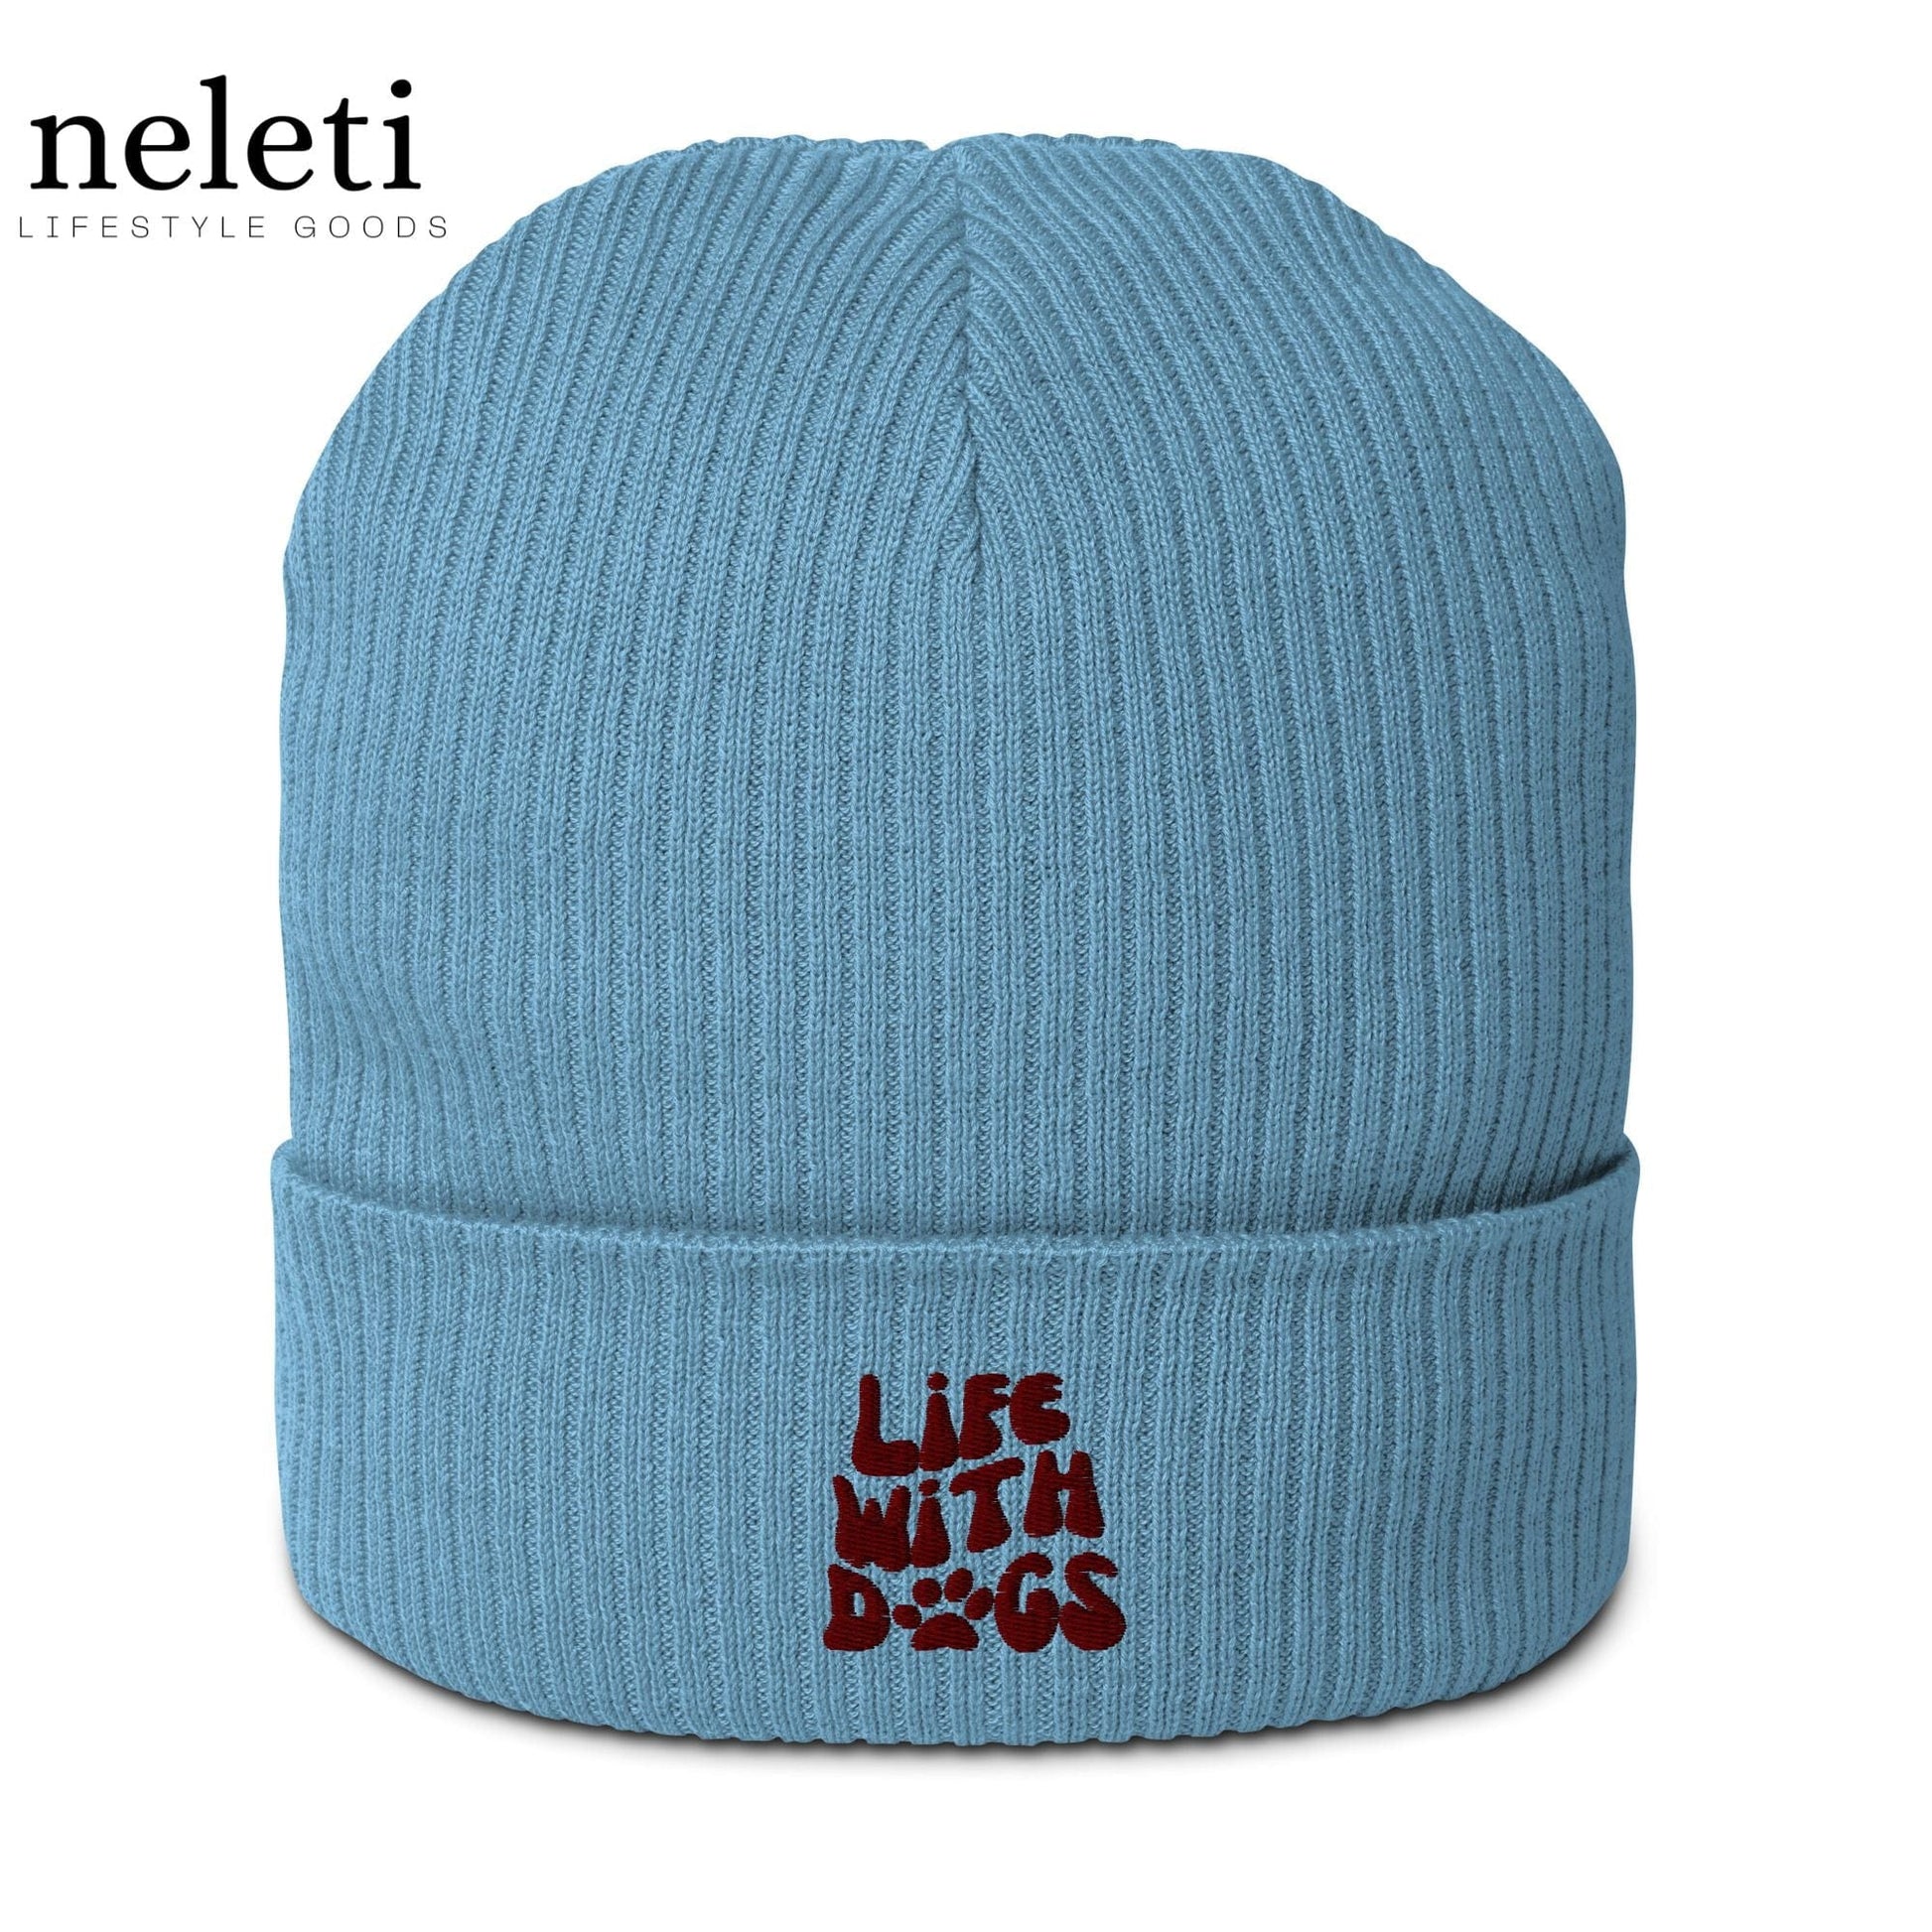 neleti.com-light-blue-beanie-for-dog-lovers